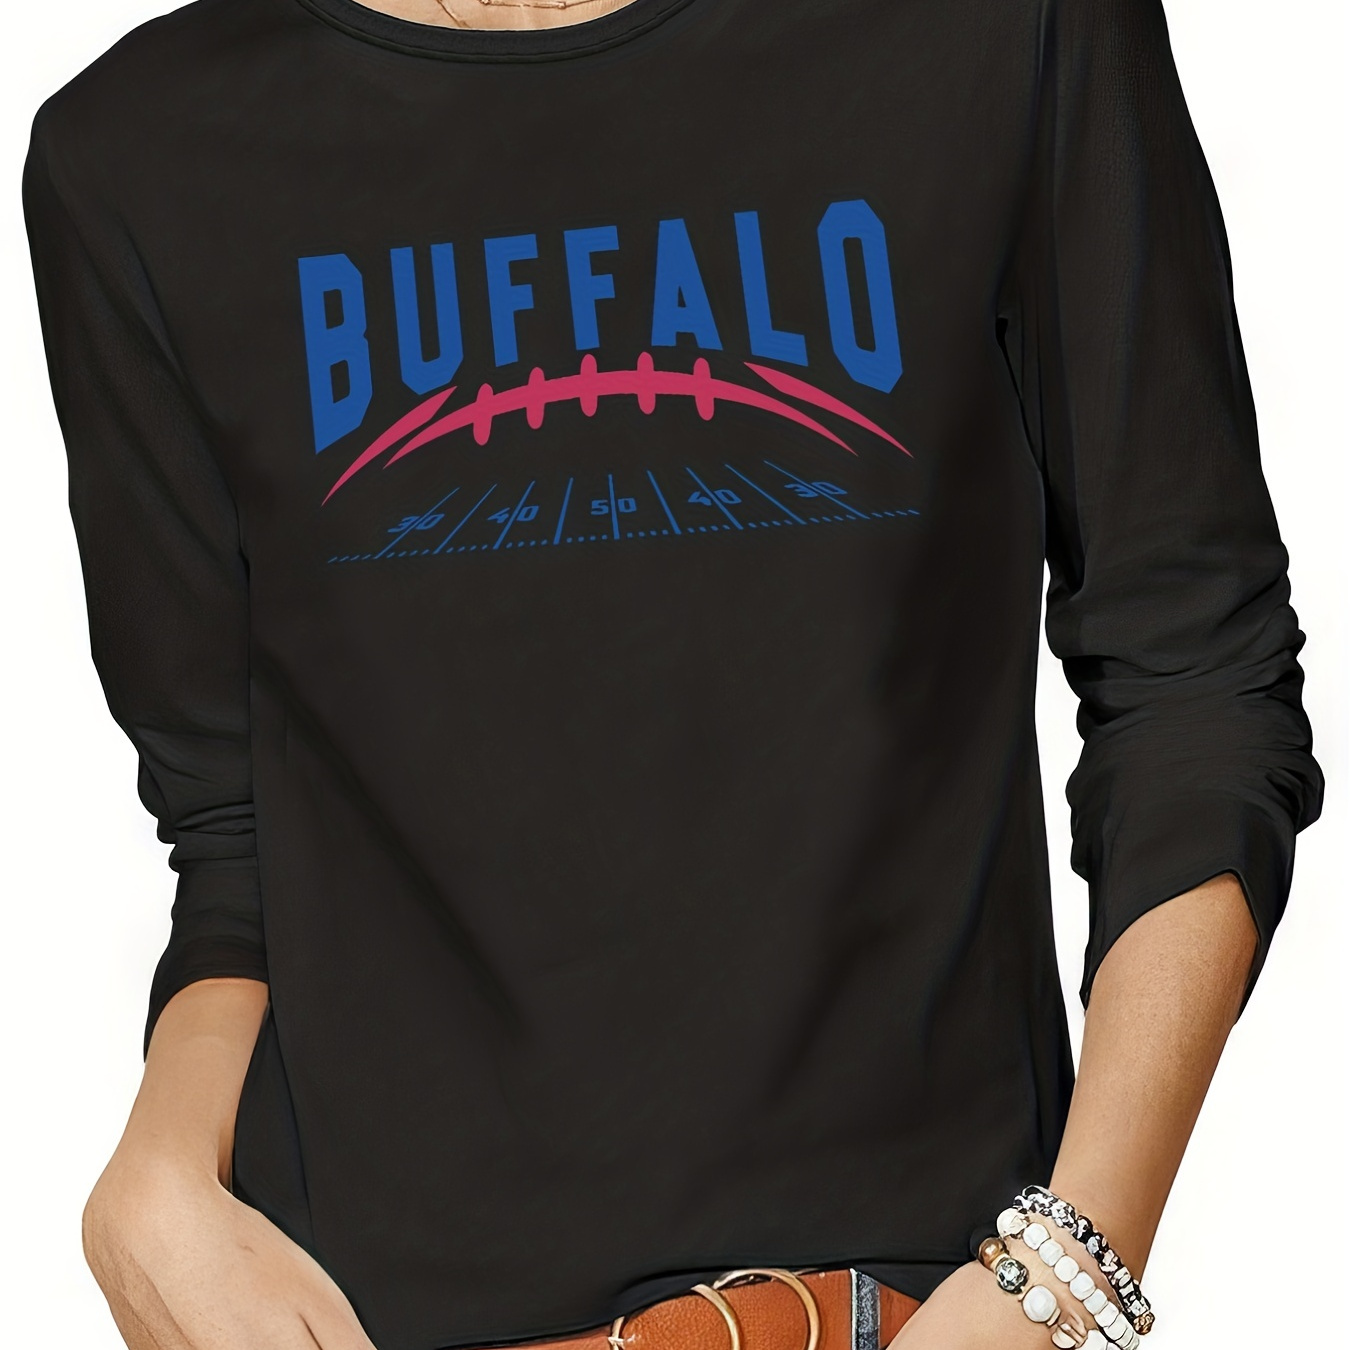 

Buffalo Letter Print T-shirt, Casual Crew Neck Long Sleeve Top, Women's Clothing